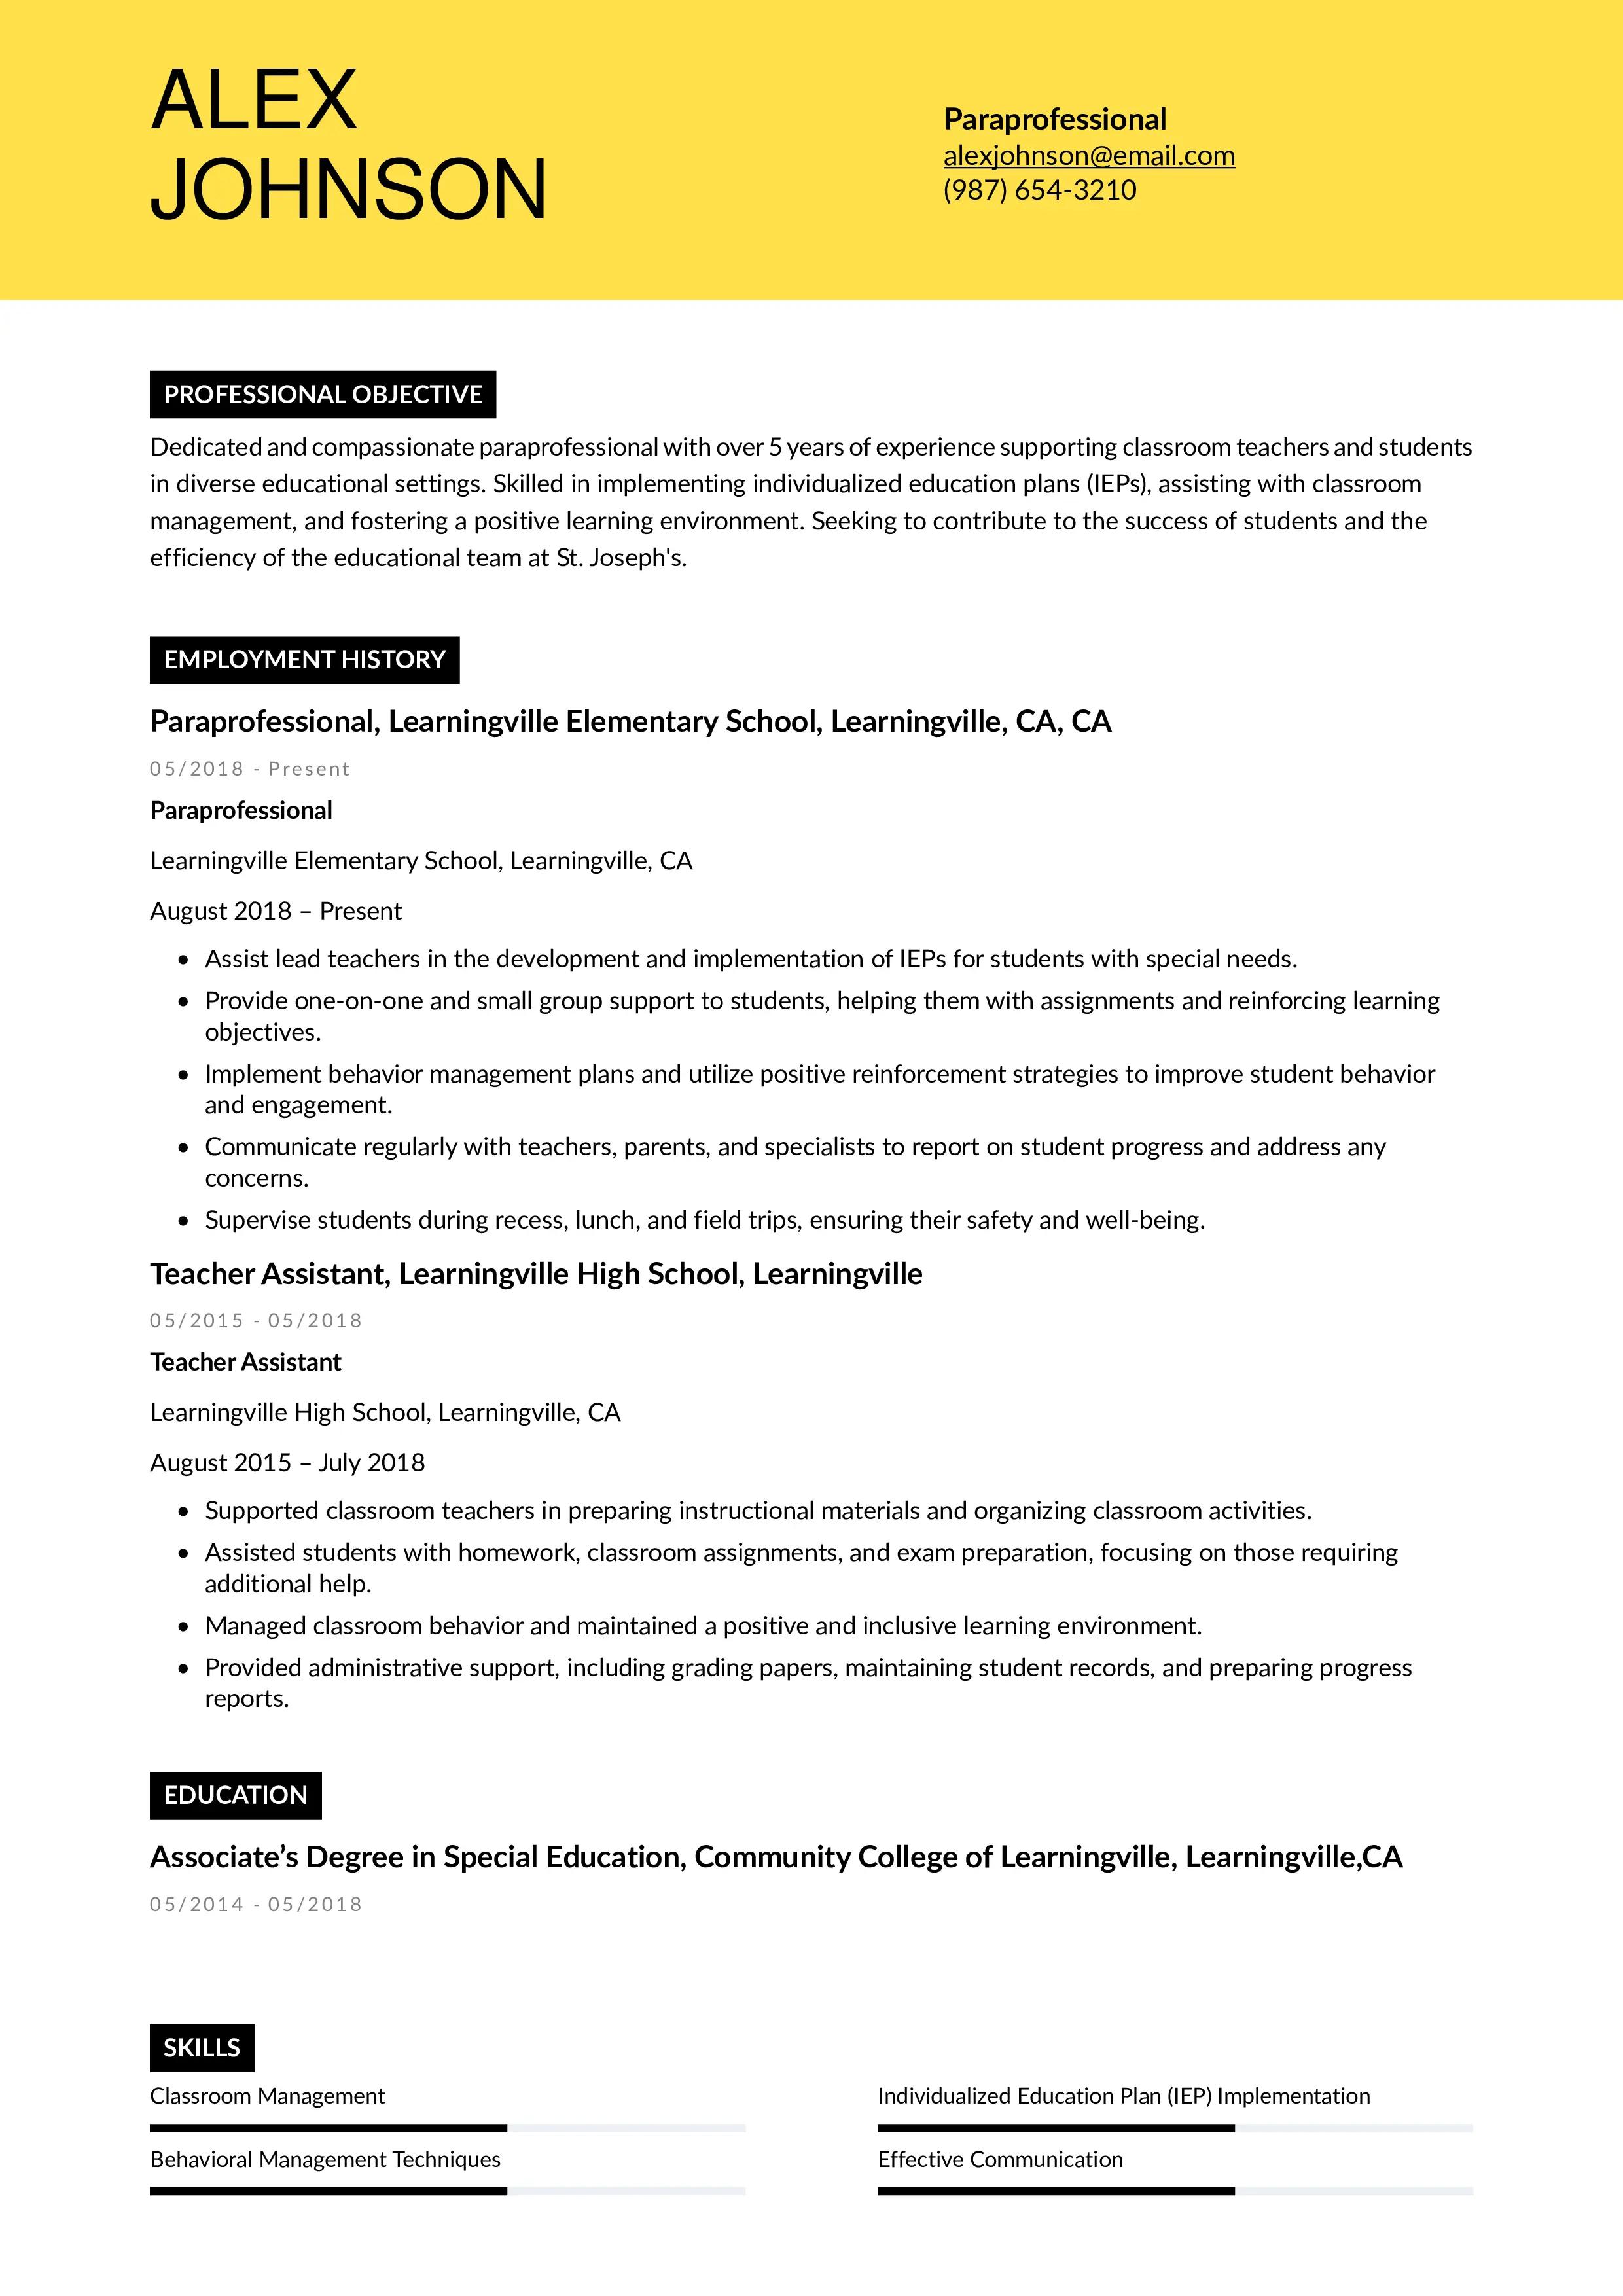 Resume example of paraprofessional resume using instaresume.io template.